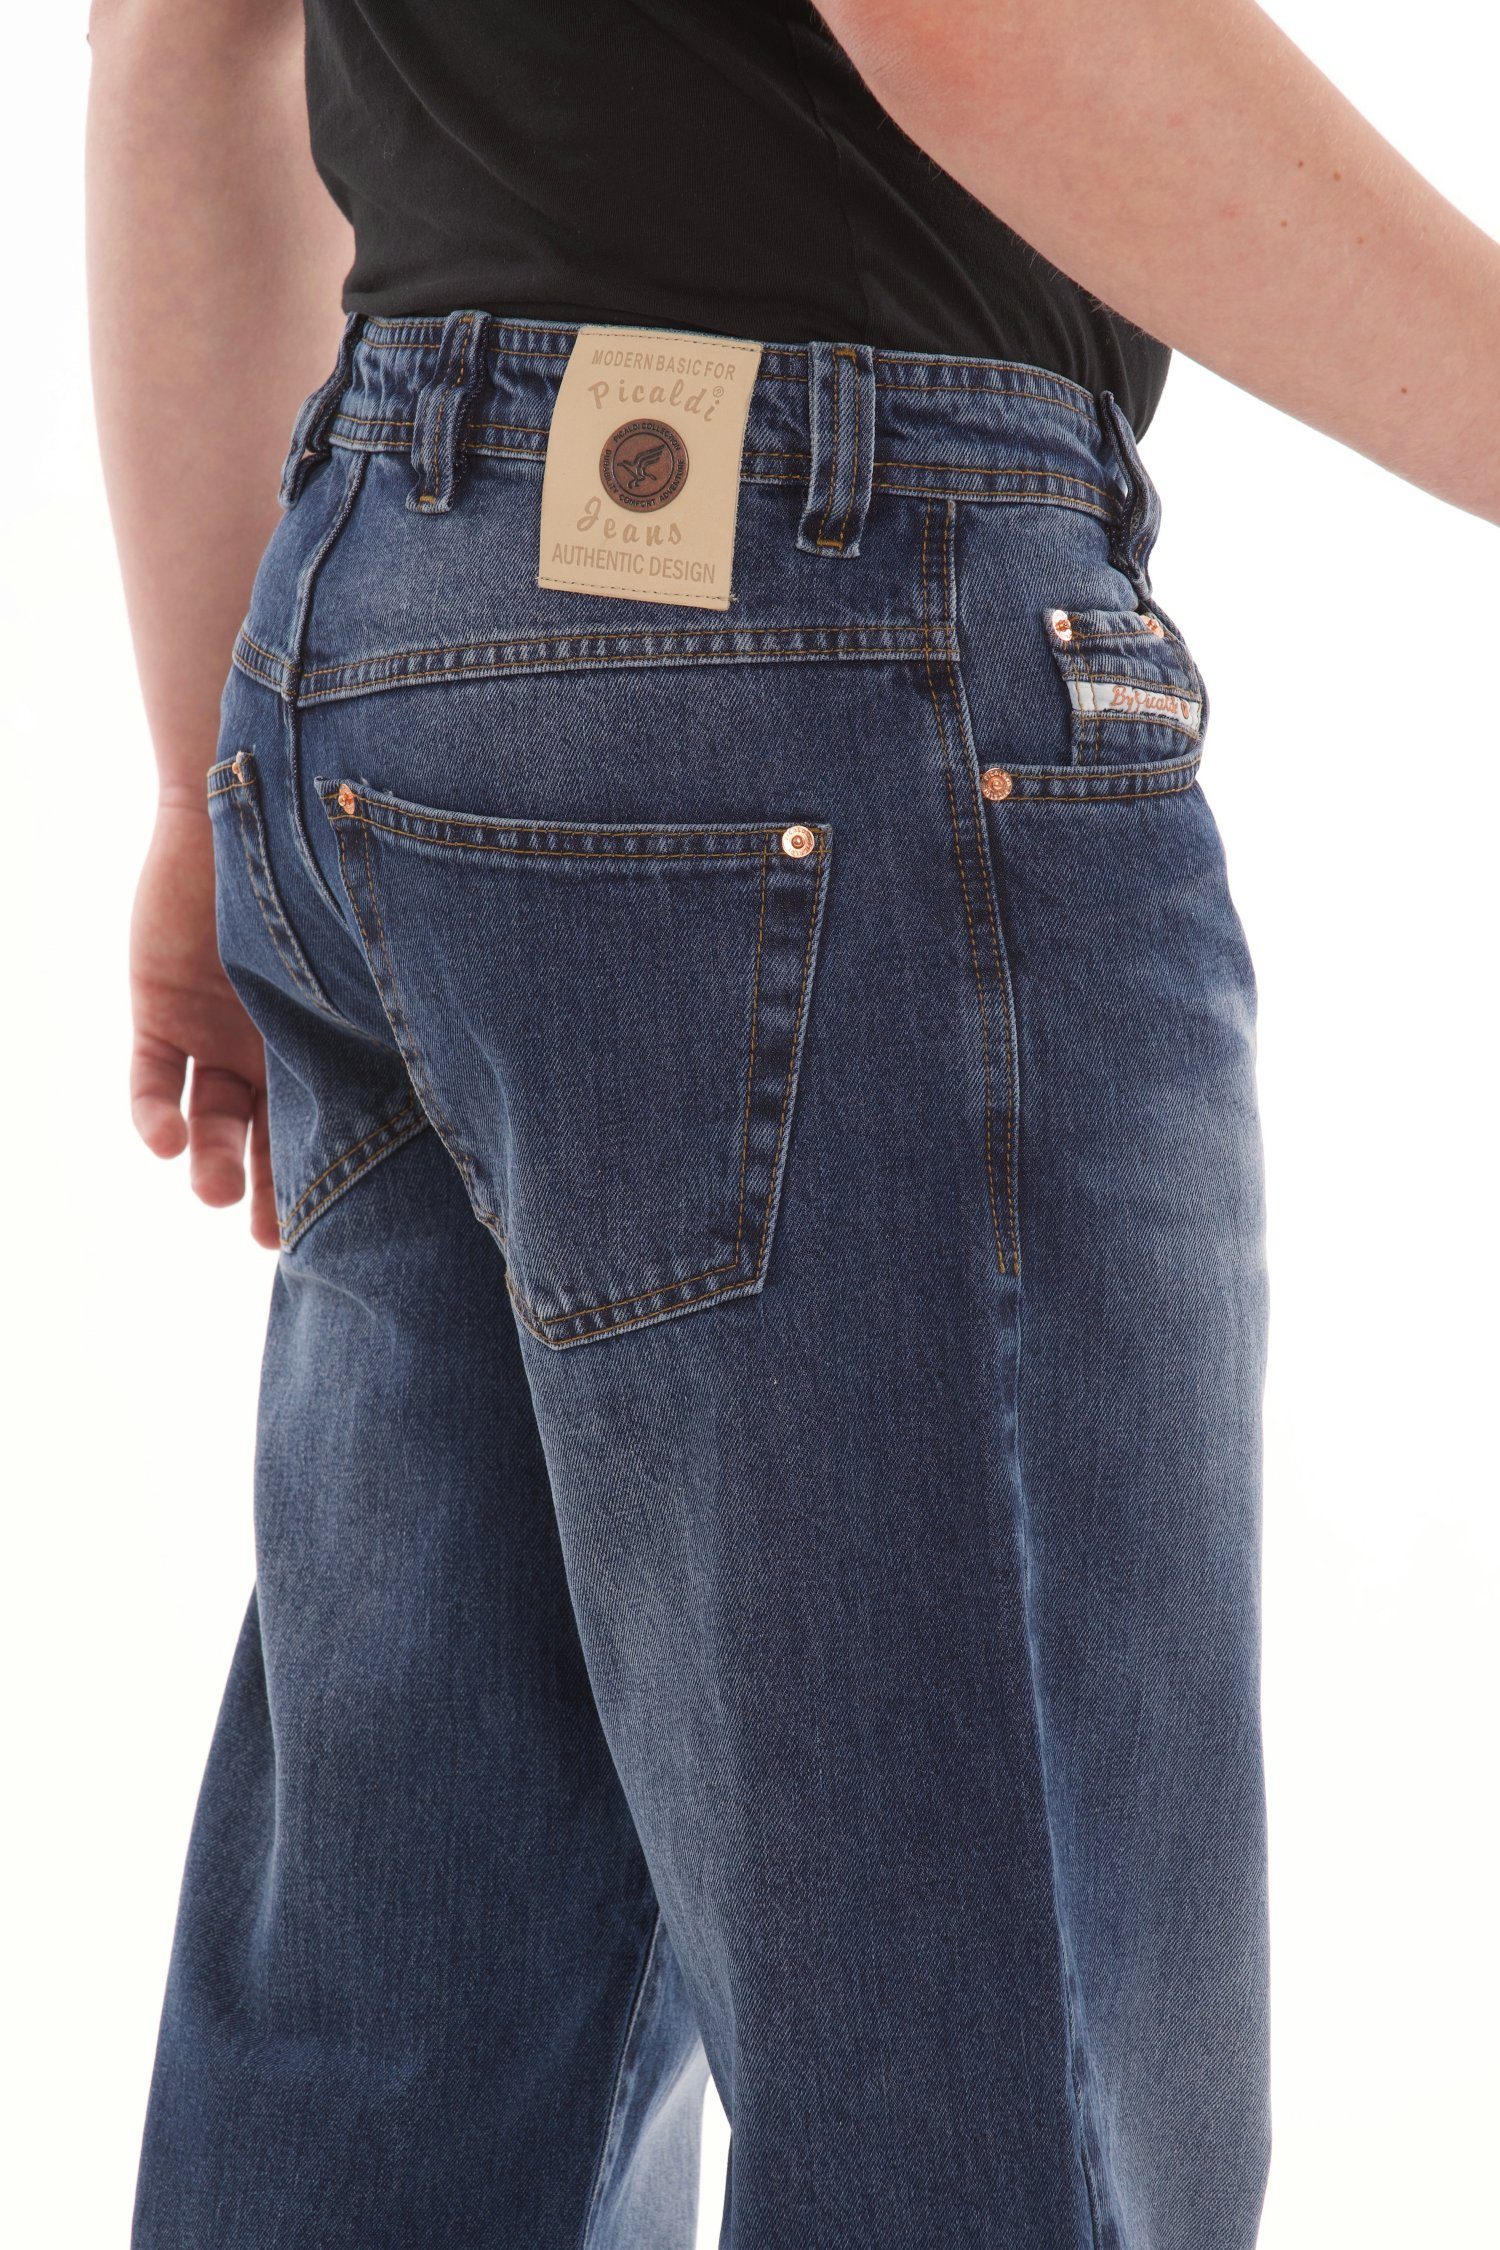 PICALDI Jeans Jeans Fit, Straight Tindery Weite lässiger 474 Leg, Baggy Zicco Schnitt Gerader